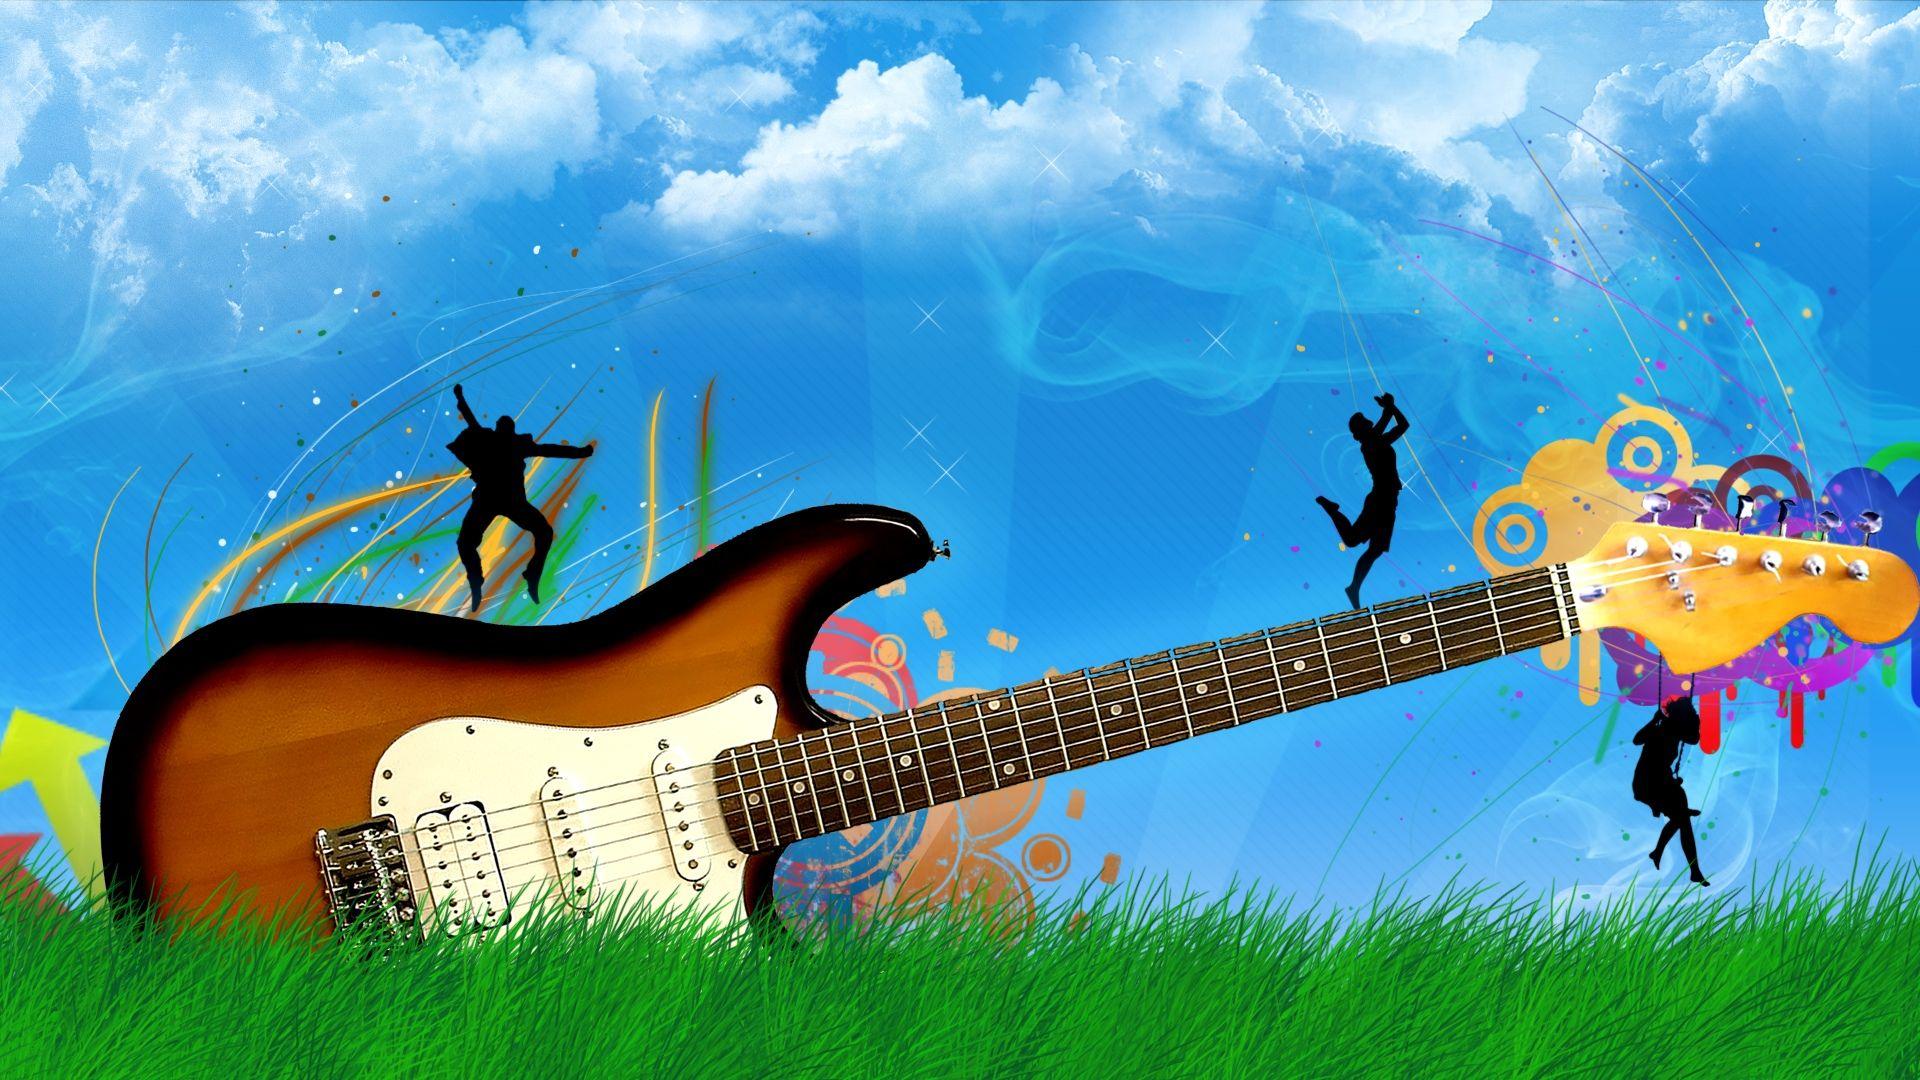 Wallpaper.wiki Wallpaper Scenic Marcin Guitar Desktop PIC WPE0013233